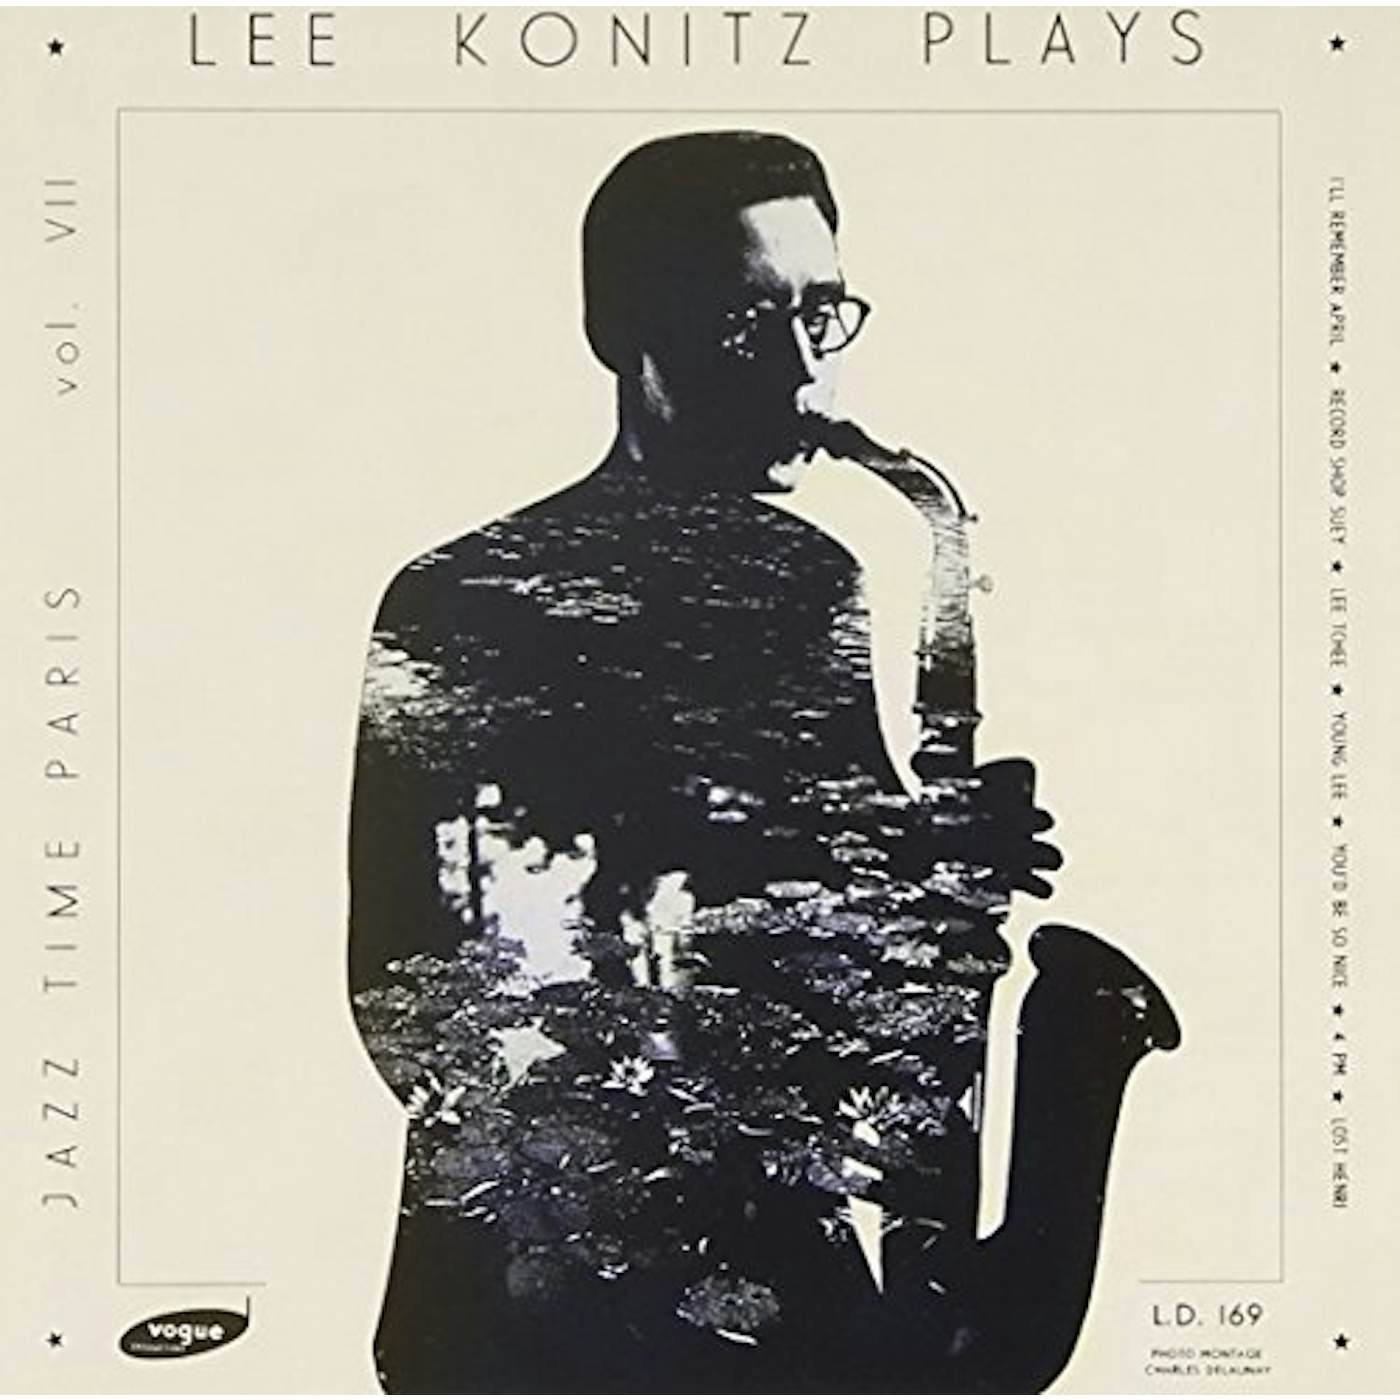 Lee Konitz PLAYS CD